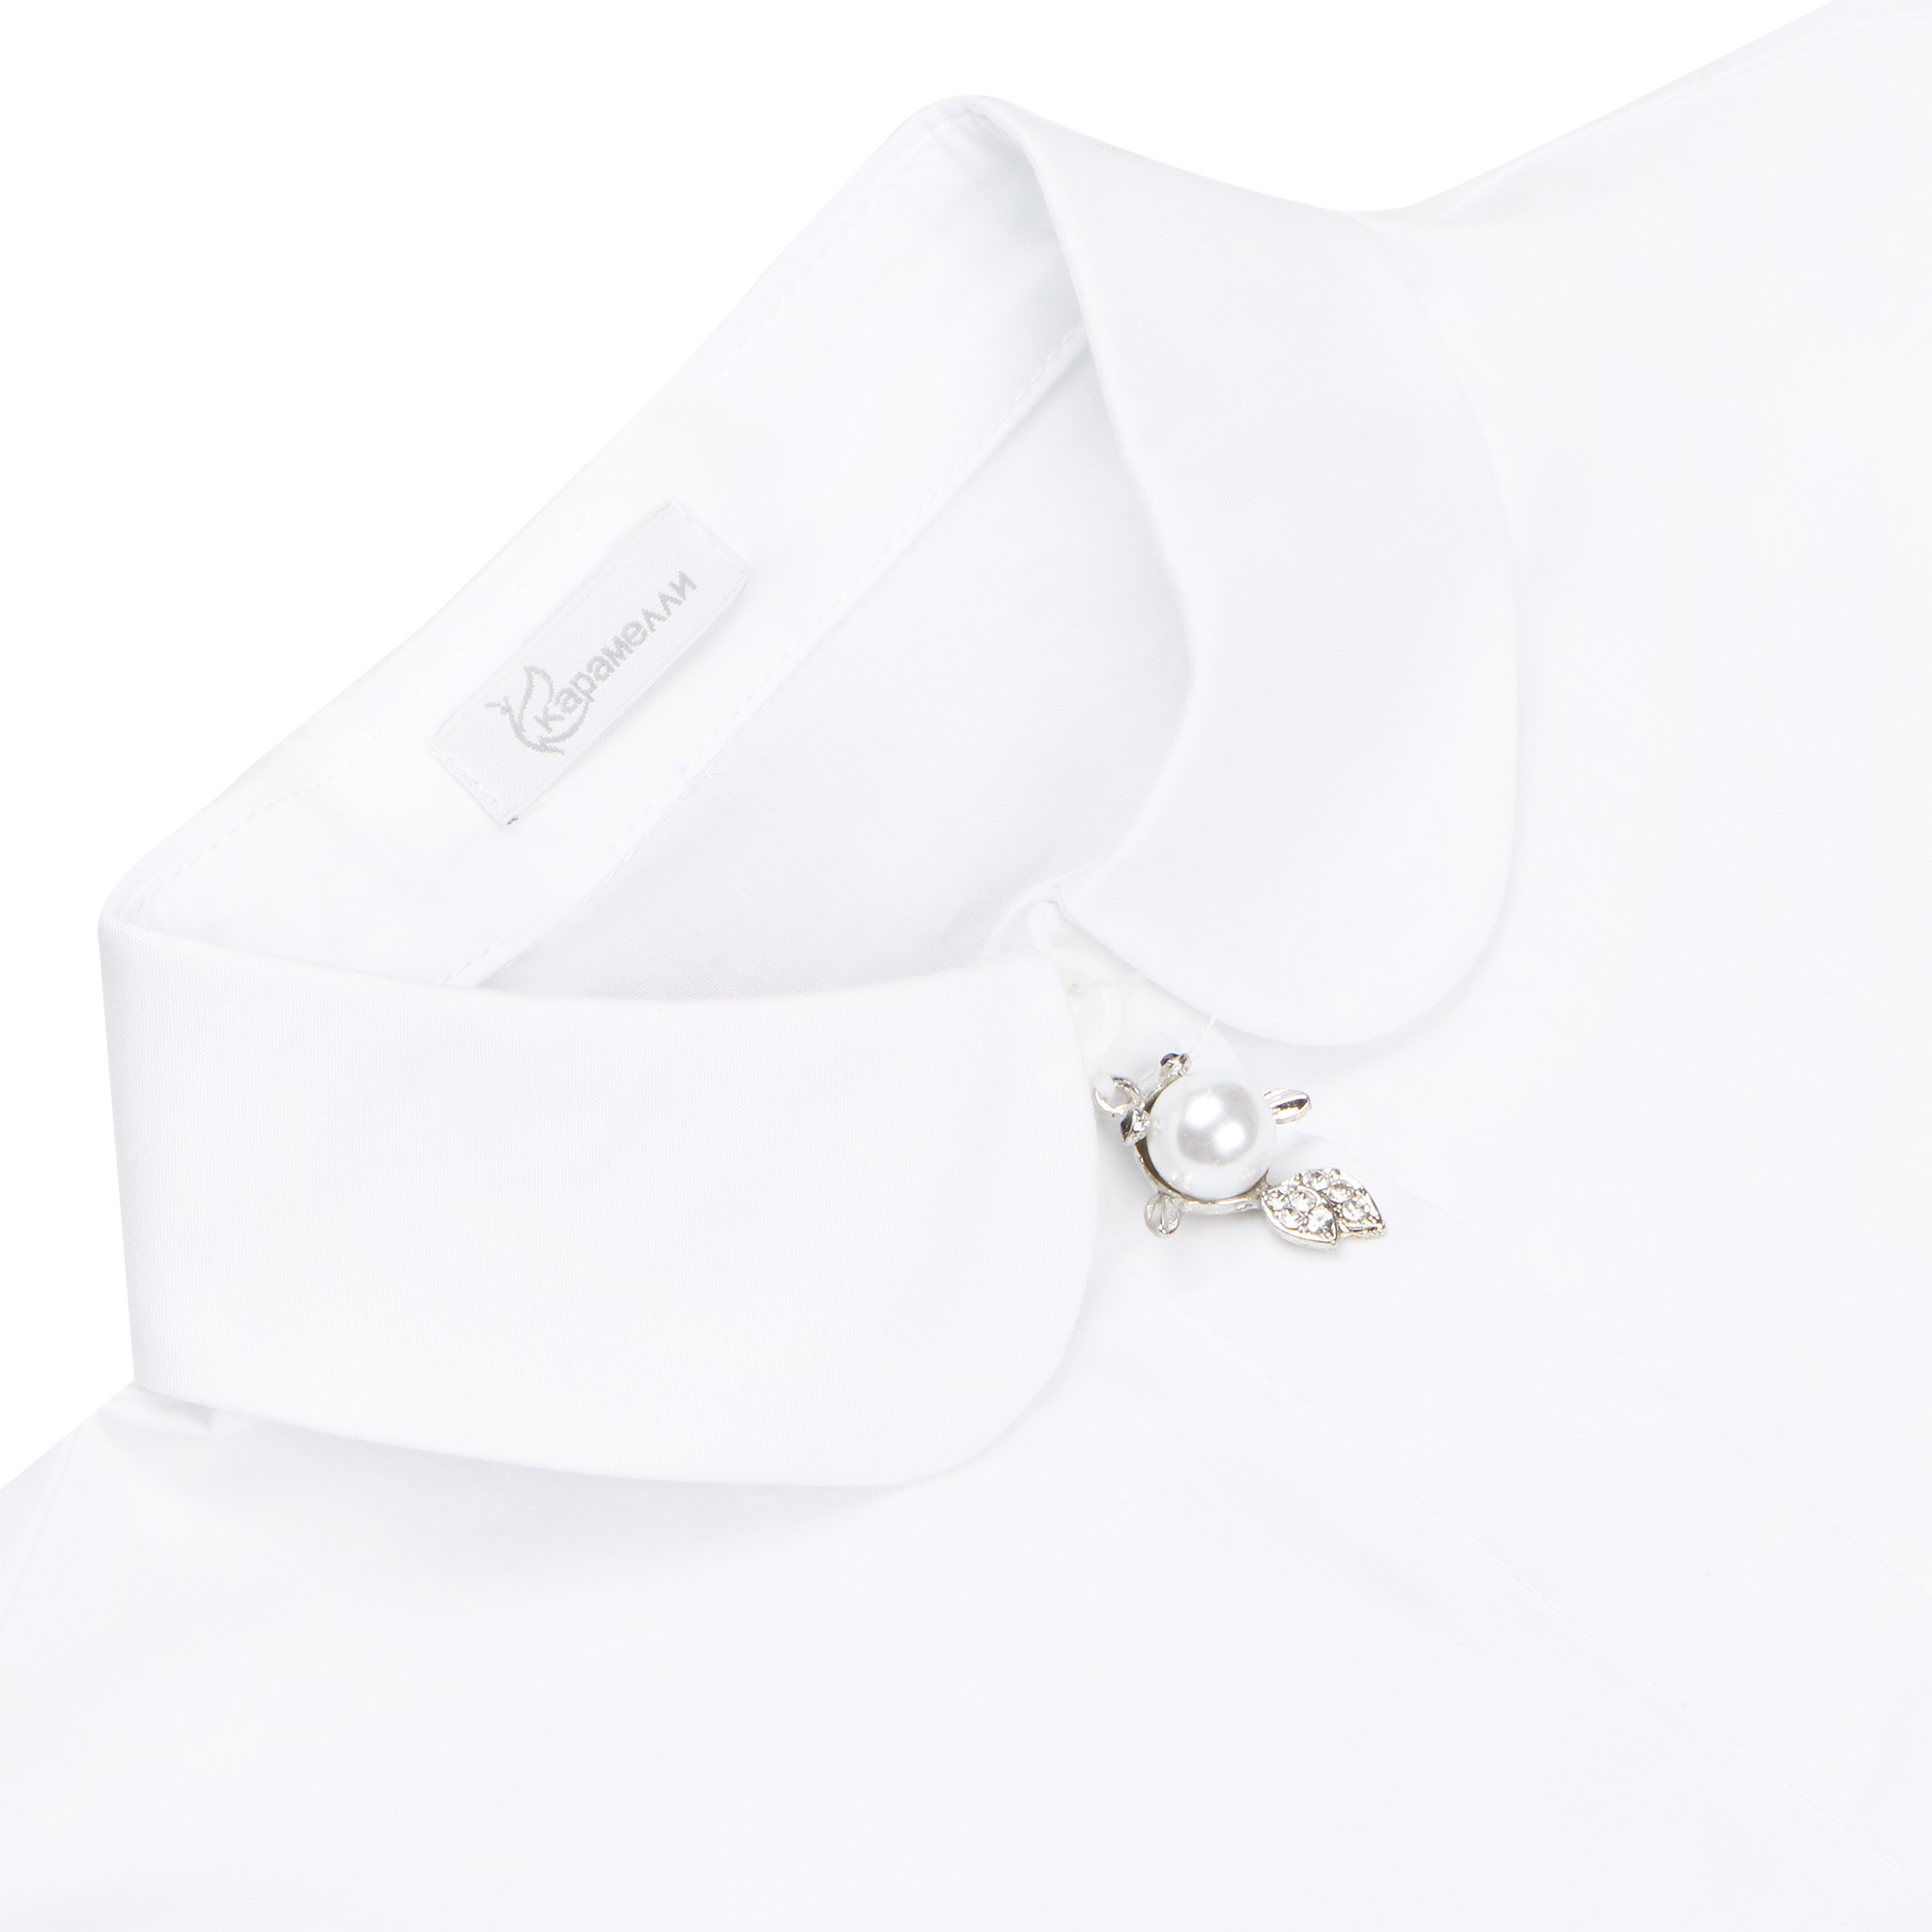 Блузка школьная КАРАМЕЛЛИ О74161 белая 122, цвет белый, размер 122 - фото 2